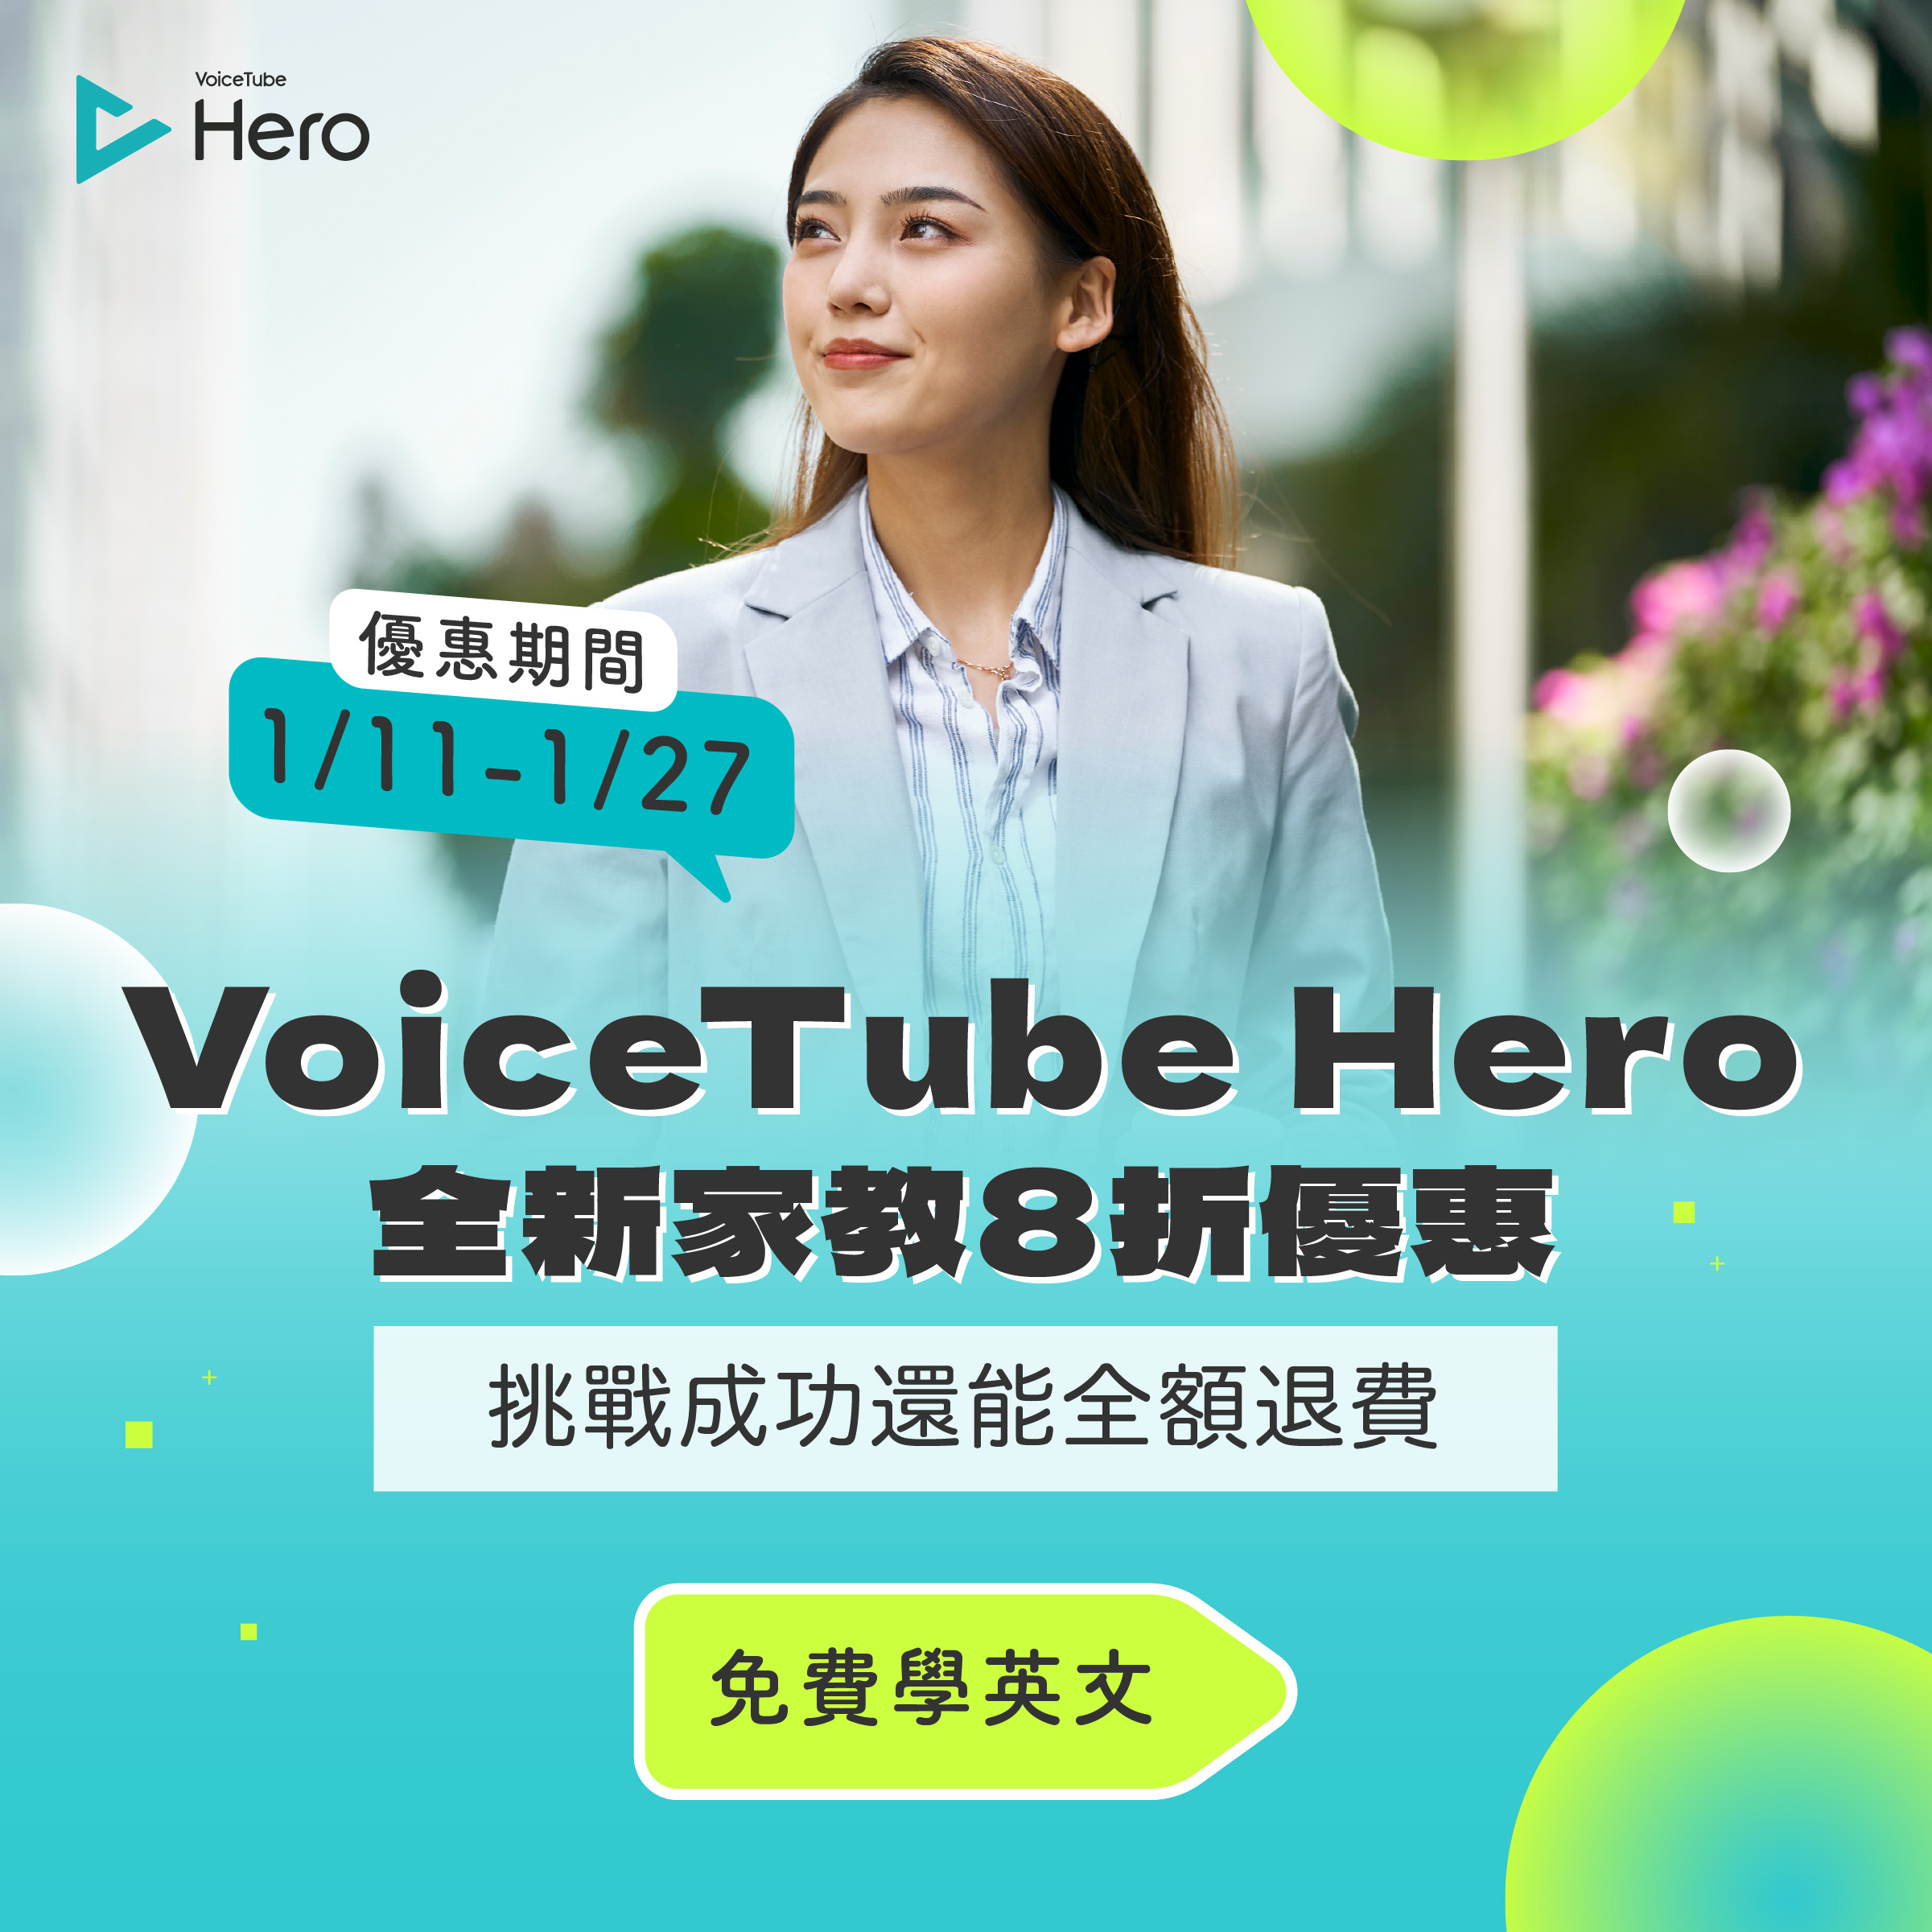 VoiceTube Hero 線上課程